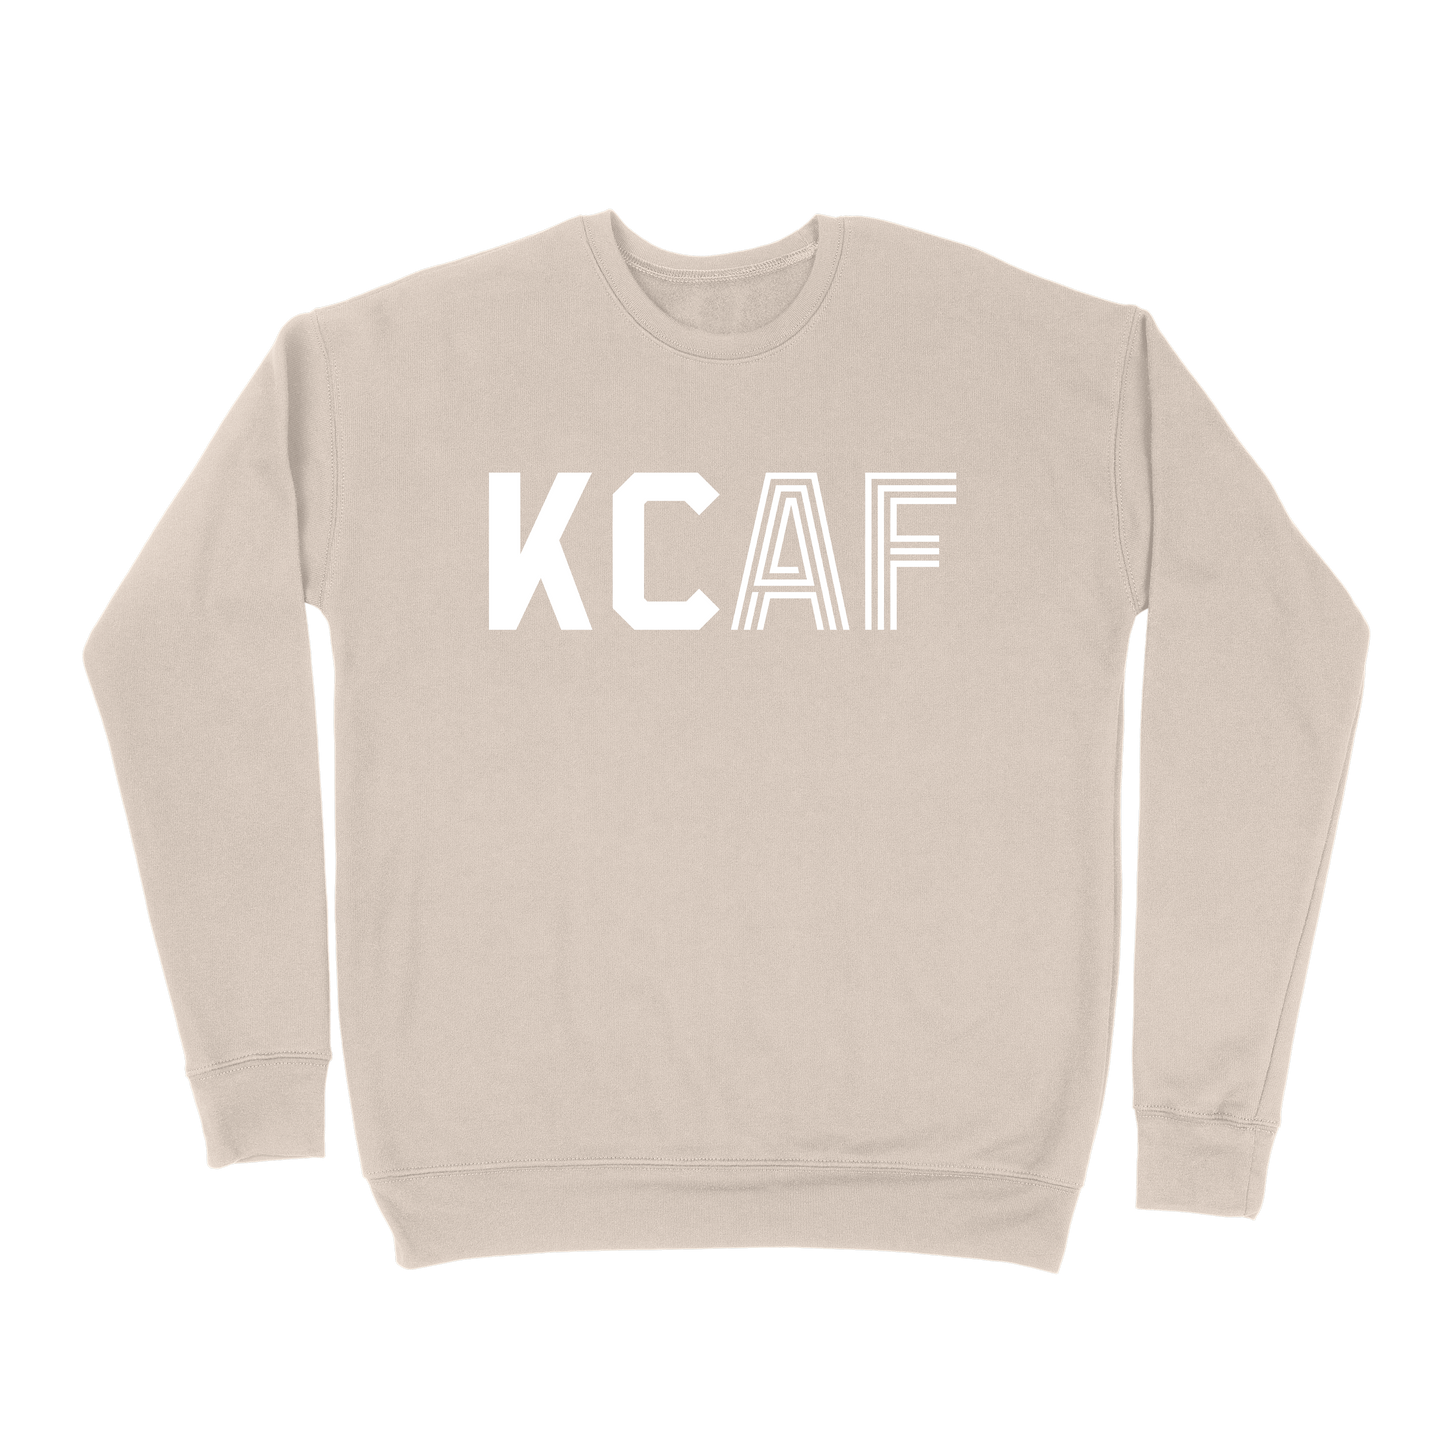 KCAF Sweatshirt - Sand